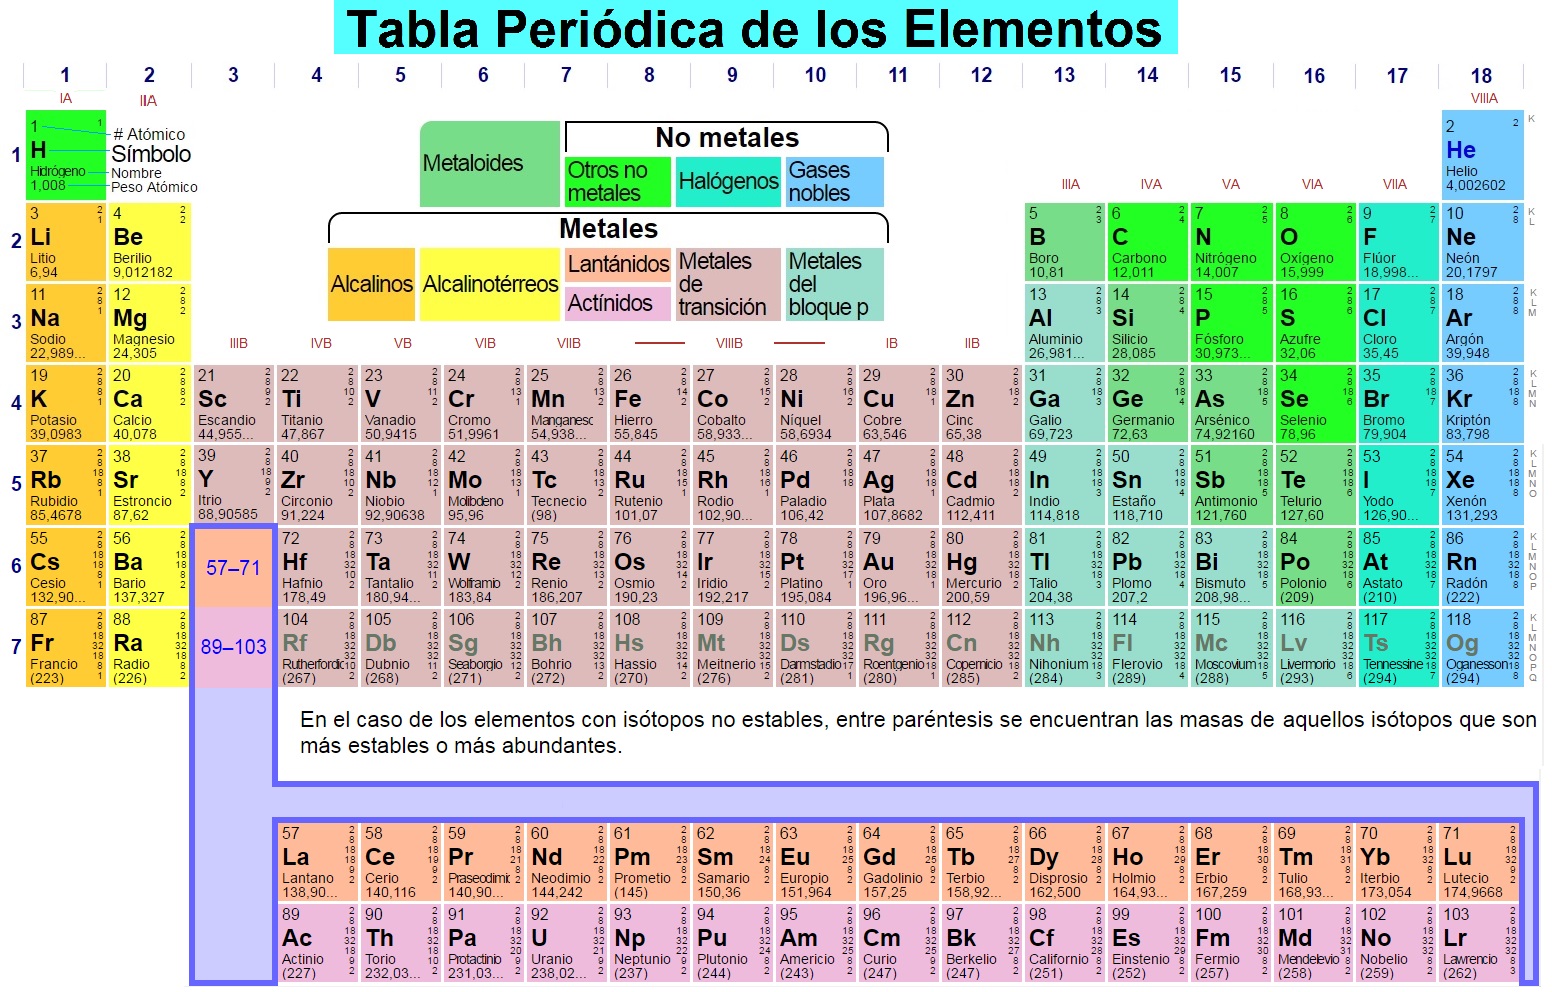 Tabela Periódica Completa